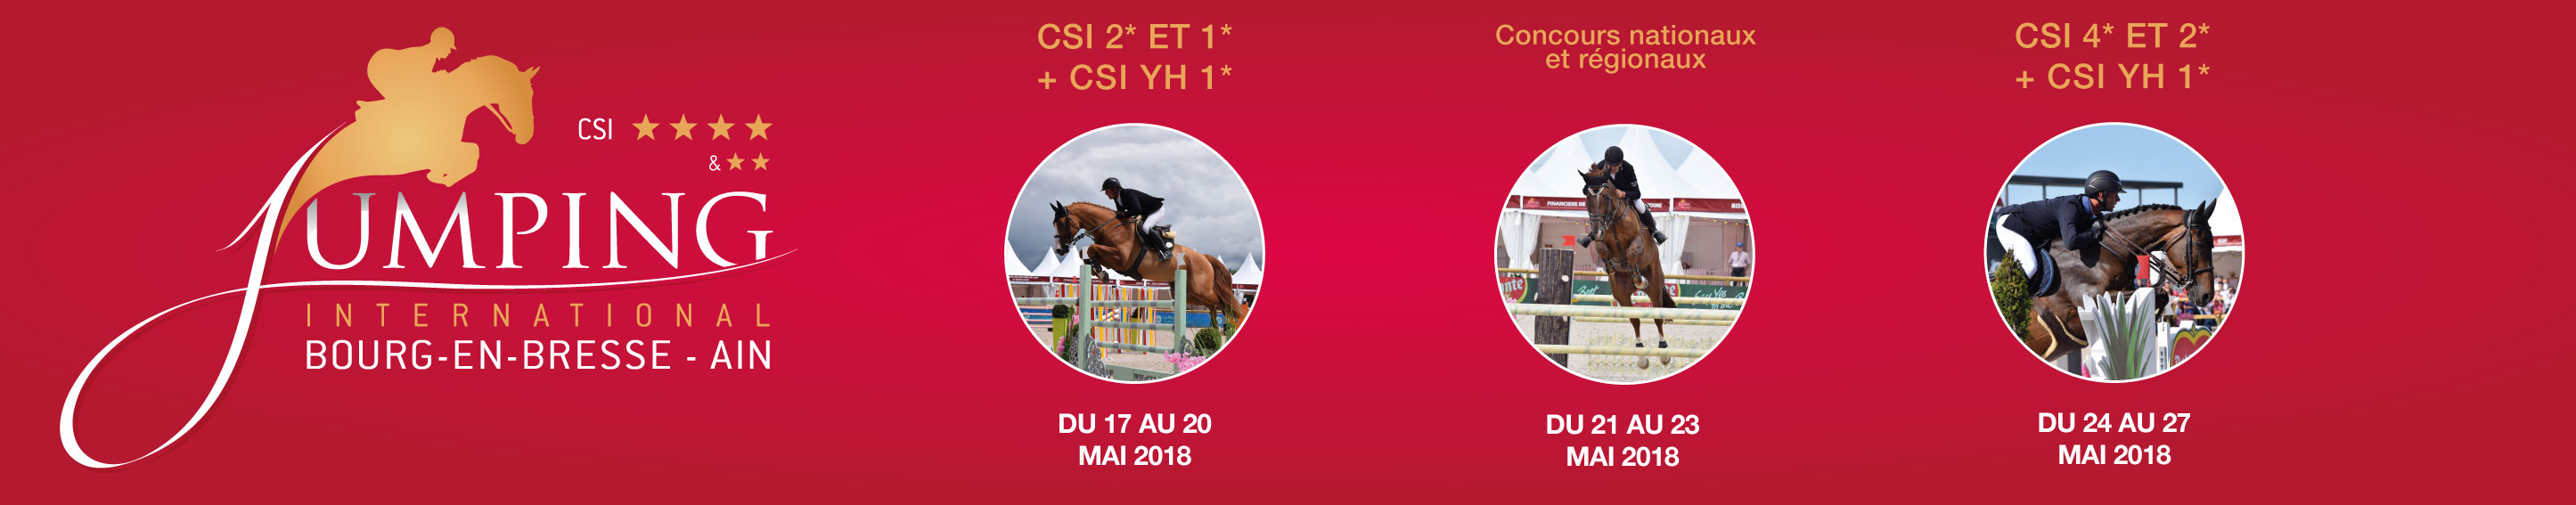 Jumping International de Bourg-en-Bresse 2018 / 17/05/2018 - 27/05/2018